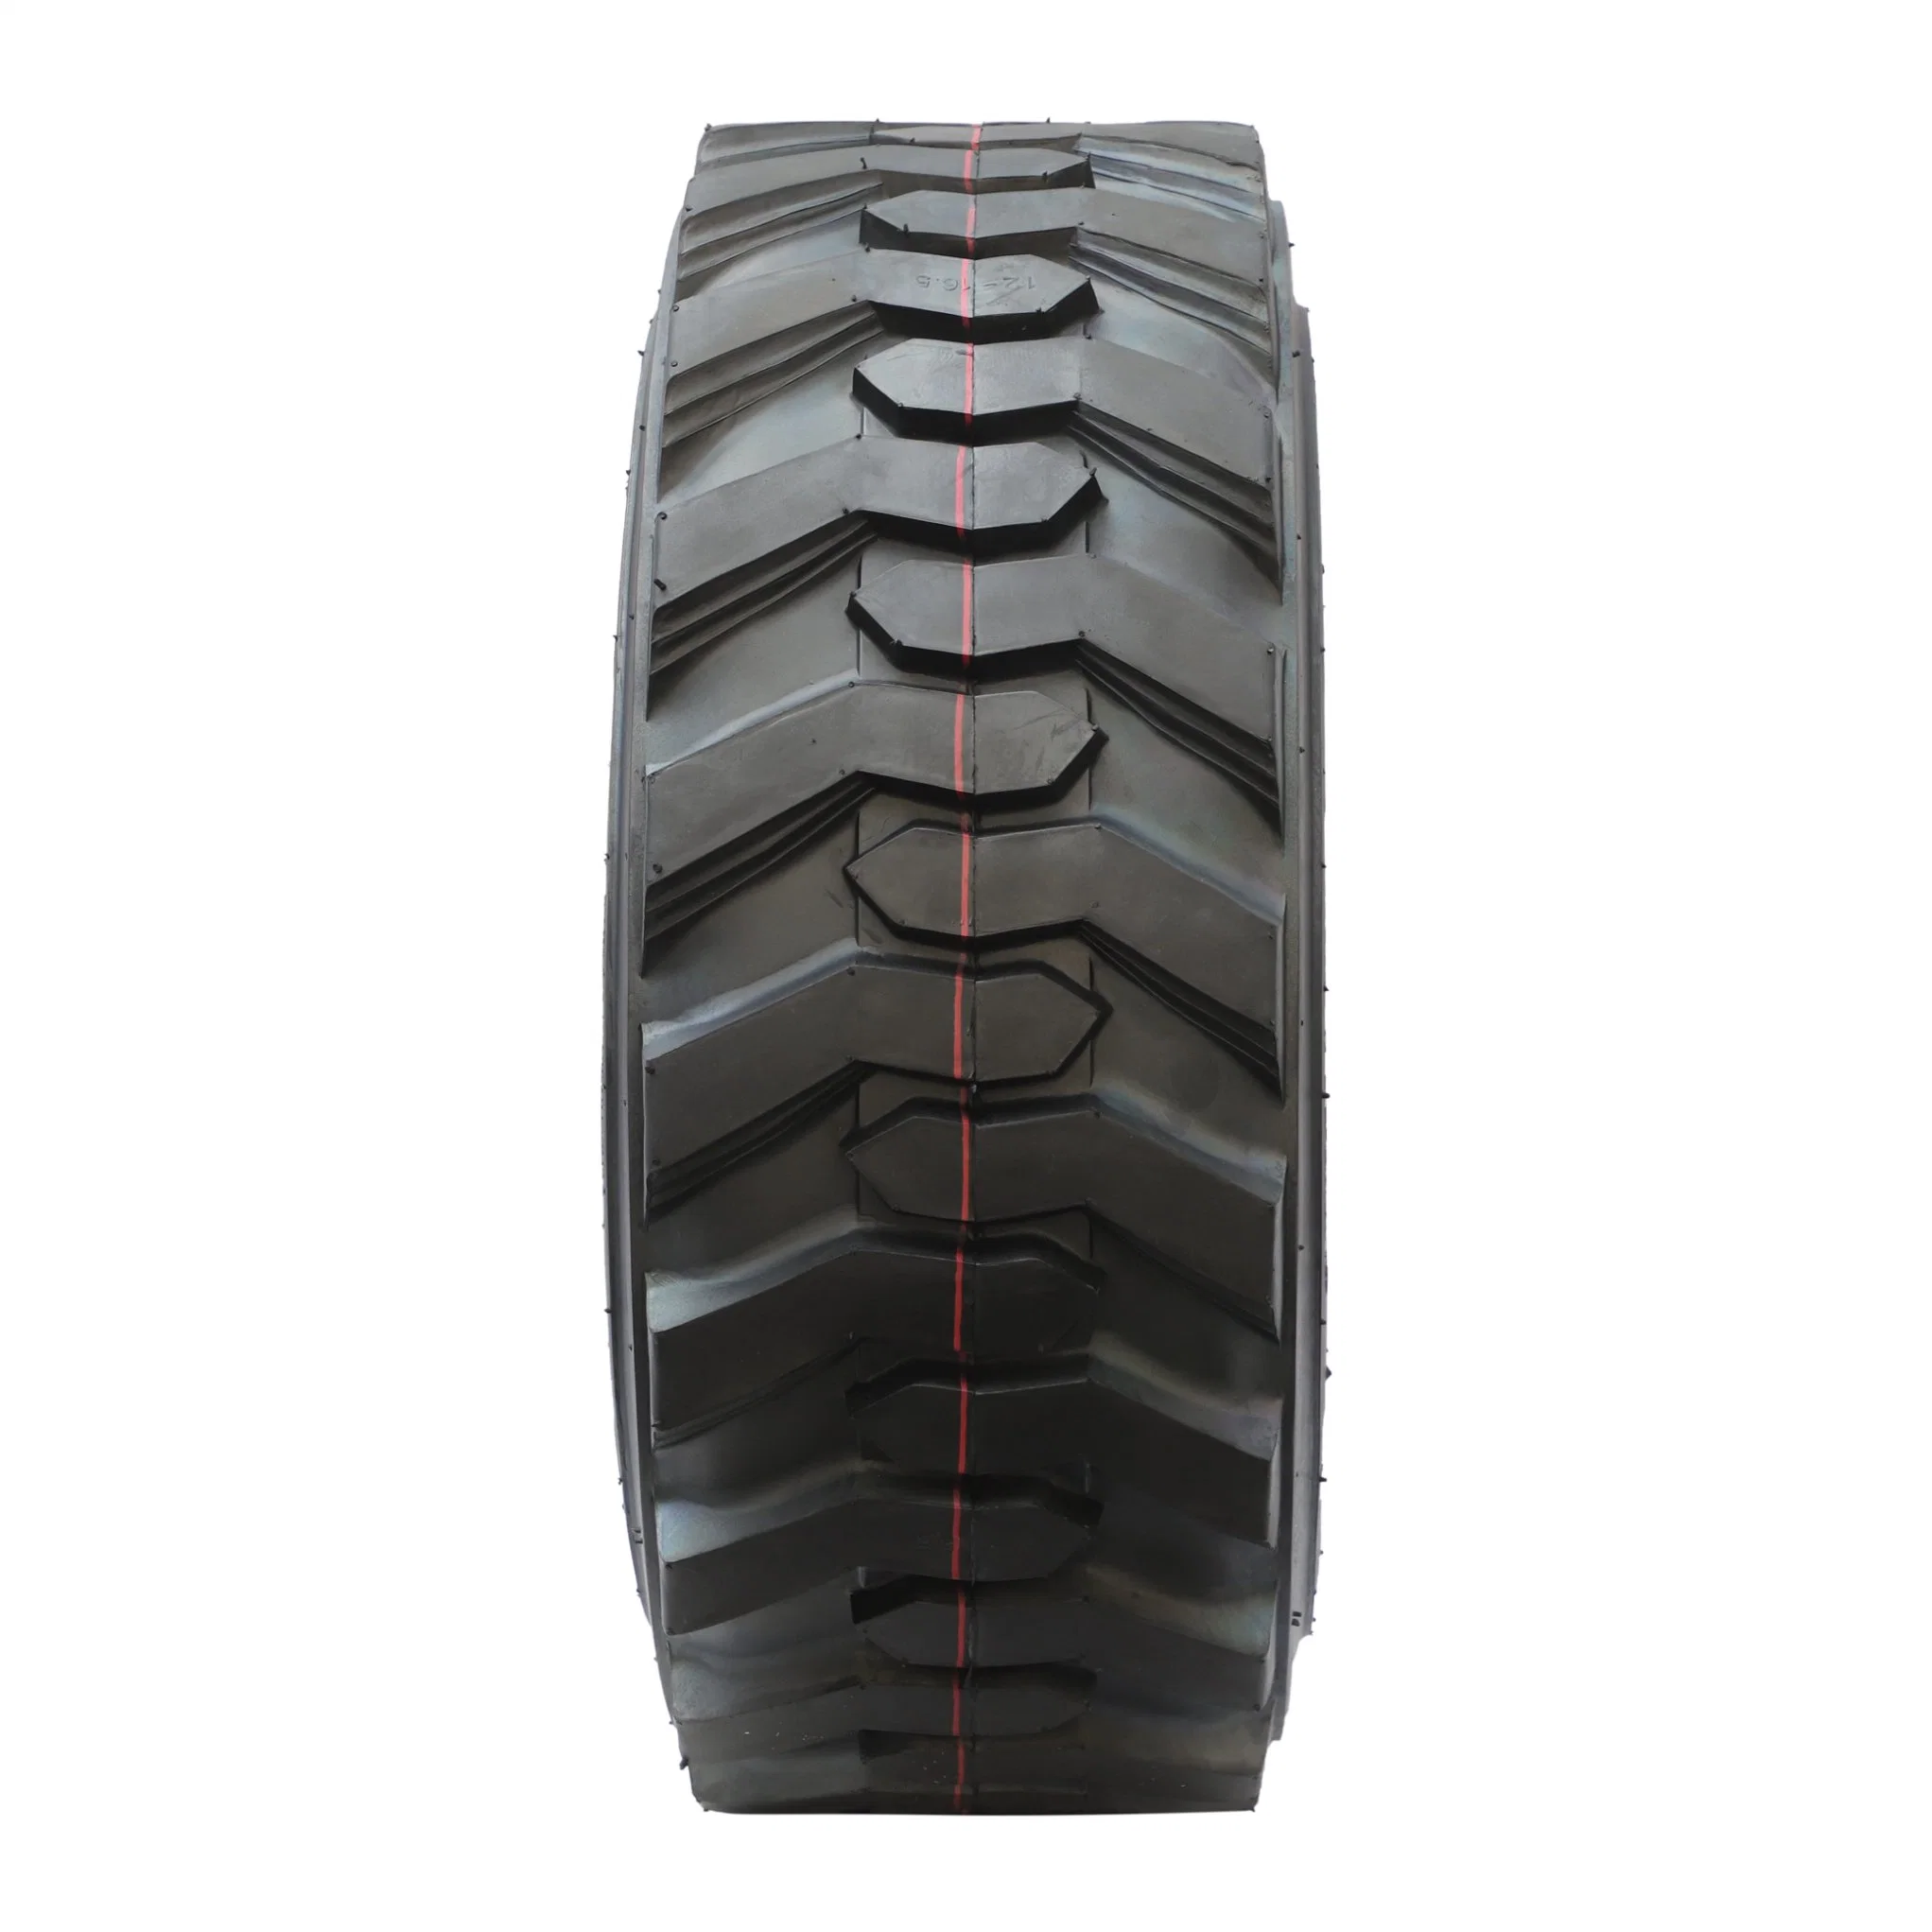 10-16,5 Skidsteer Reifen Industrie Skid Steer Reifen Industrie Schlauchlosen Reifen Sks Reifen